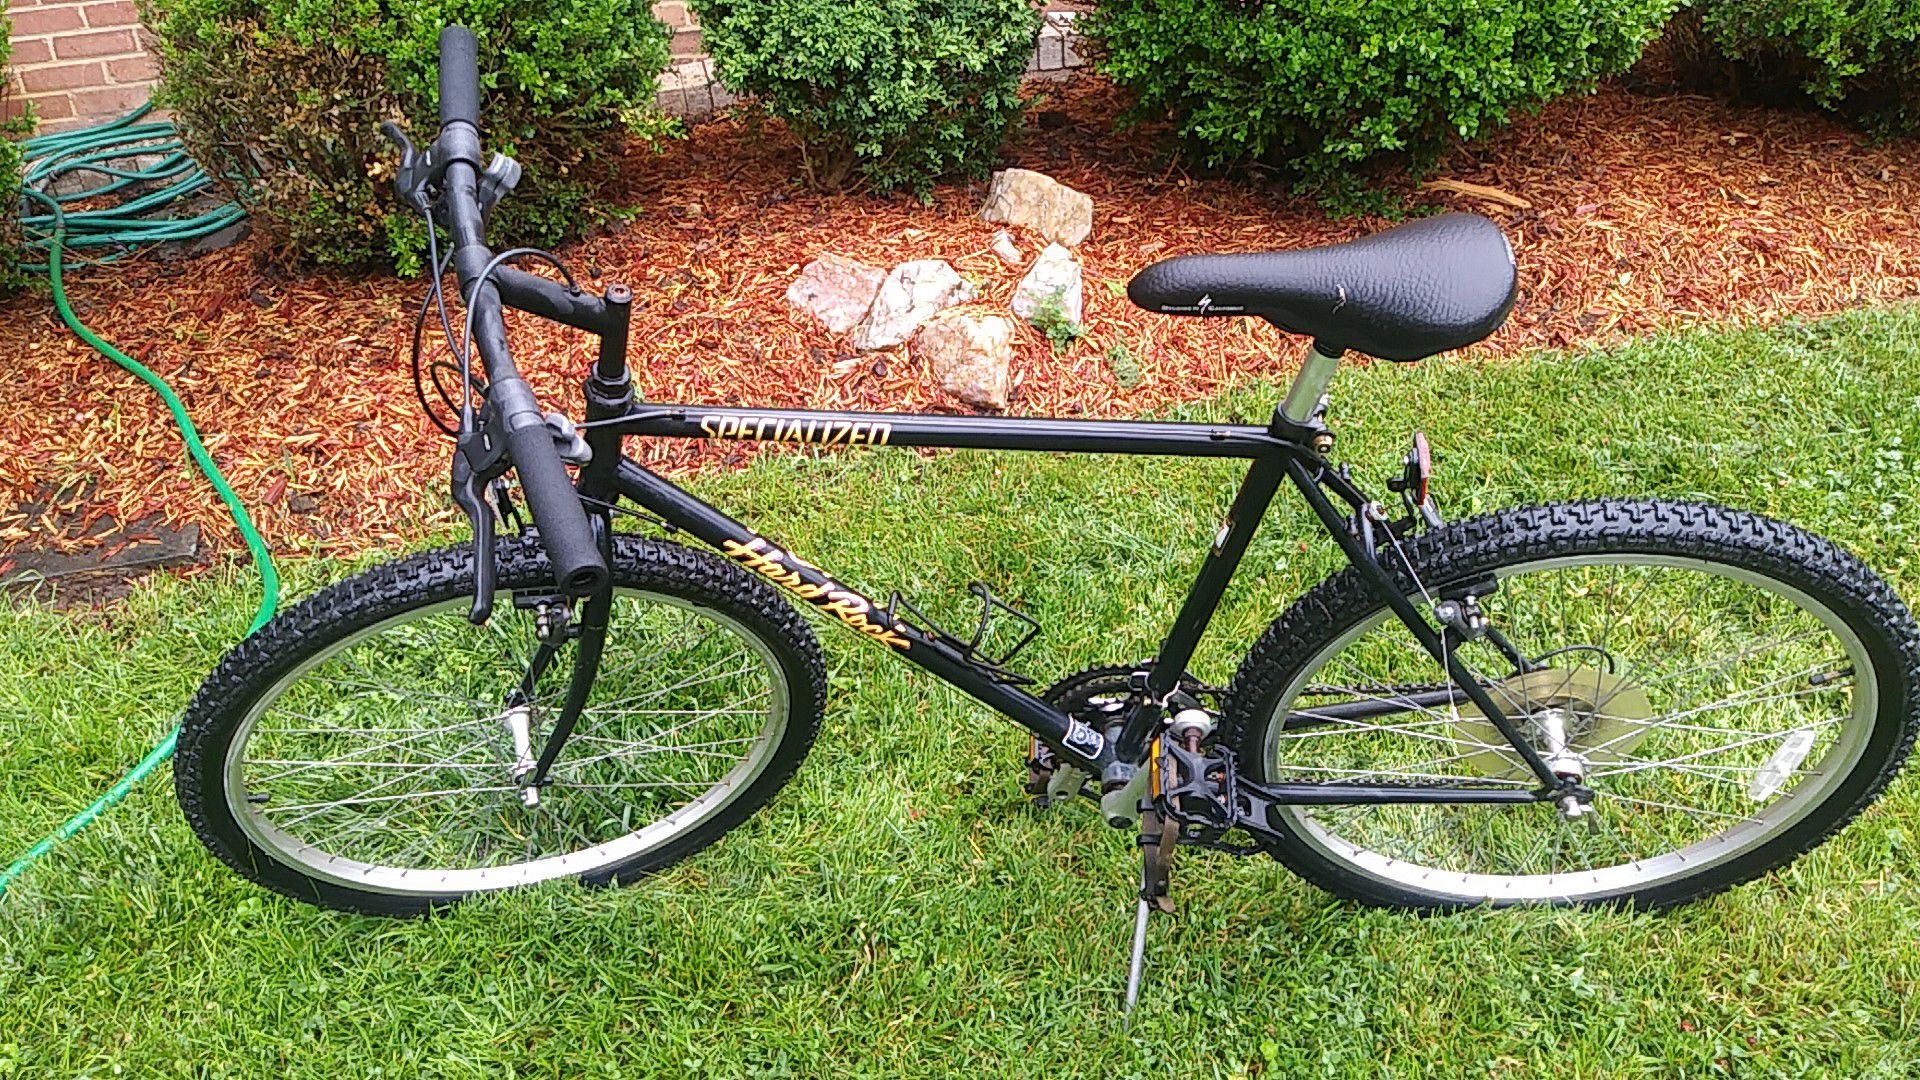 Bike specialized hard rock $120